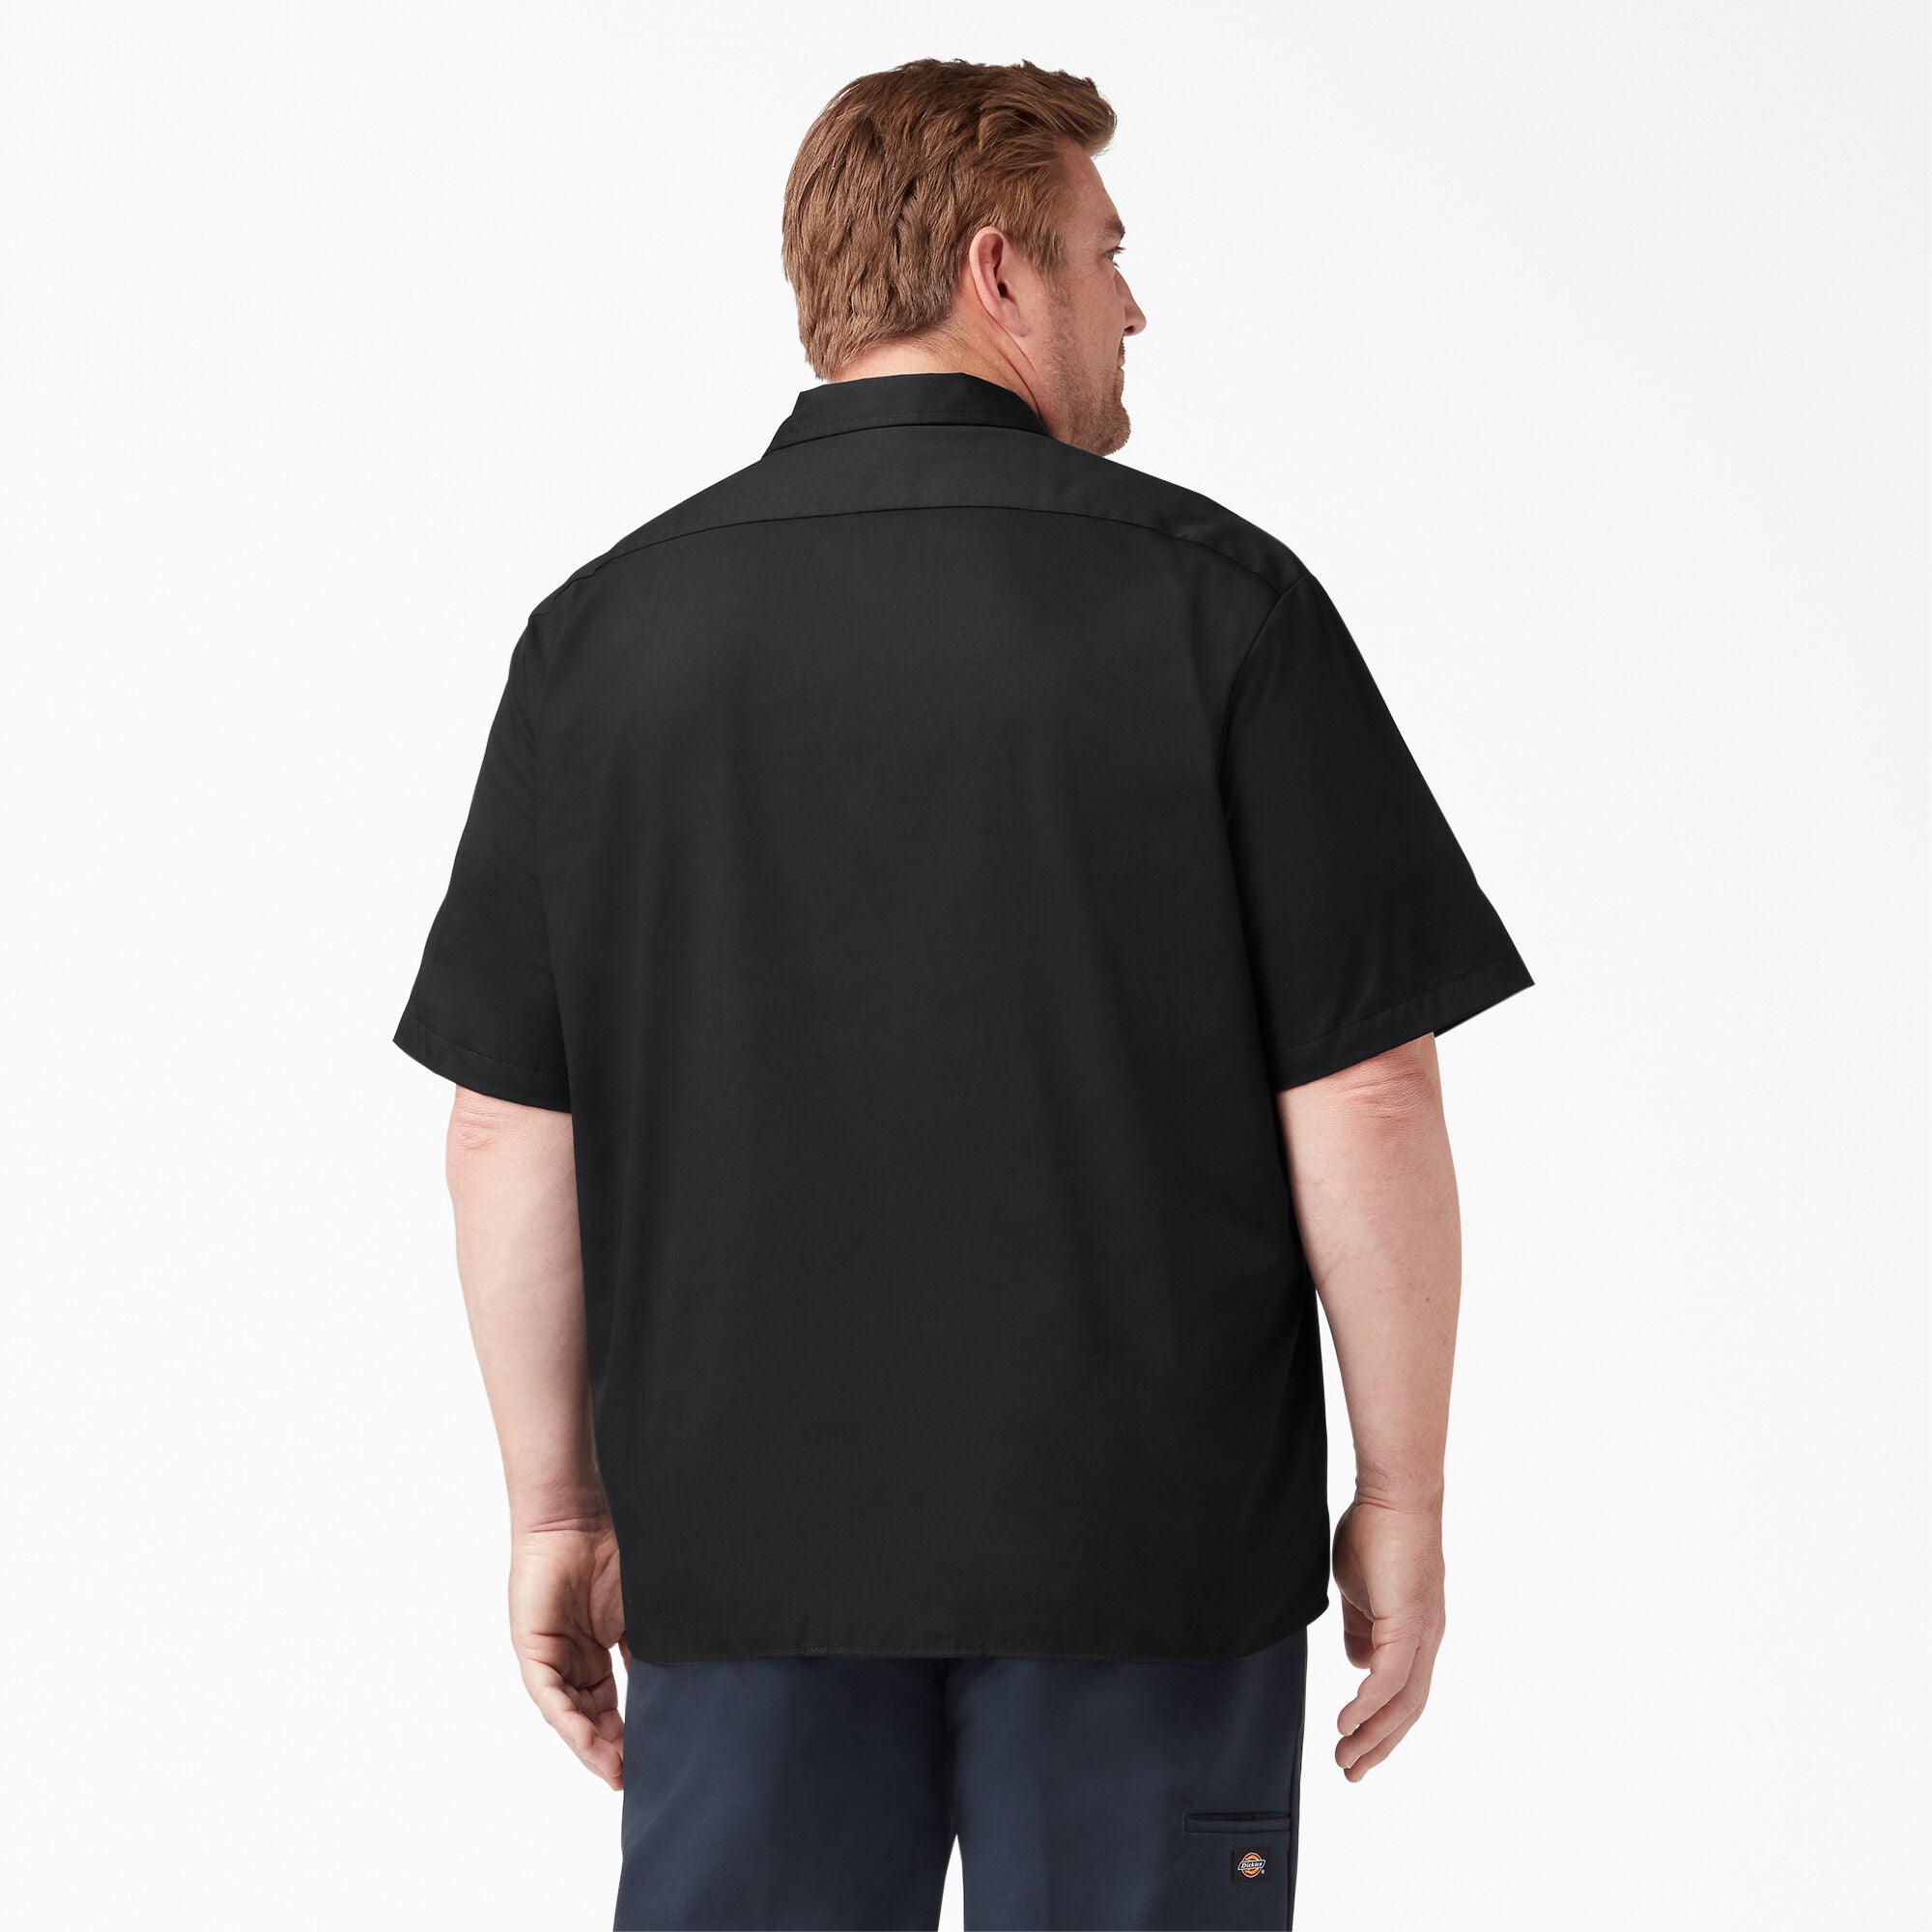 Dickies Short Sleeve Work Shirt, Black - The Blue Ox 916